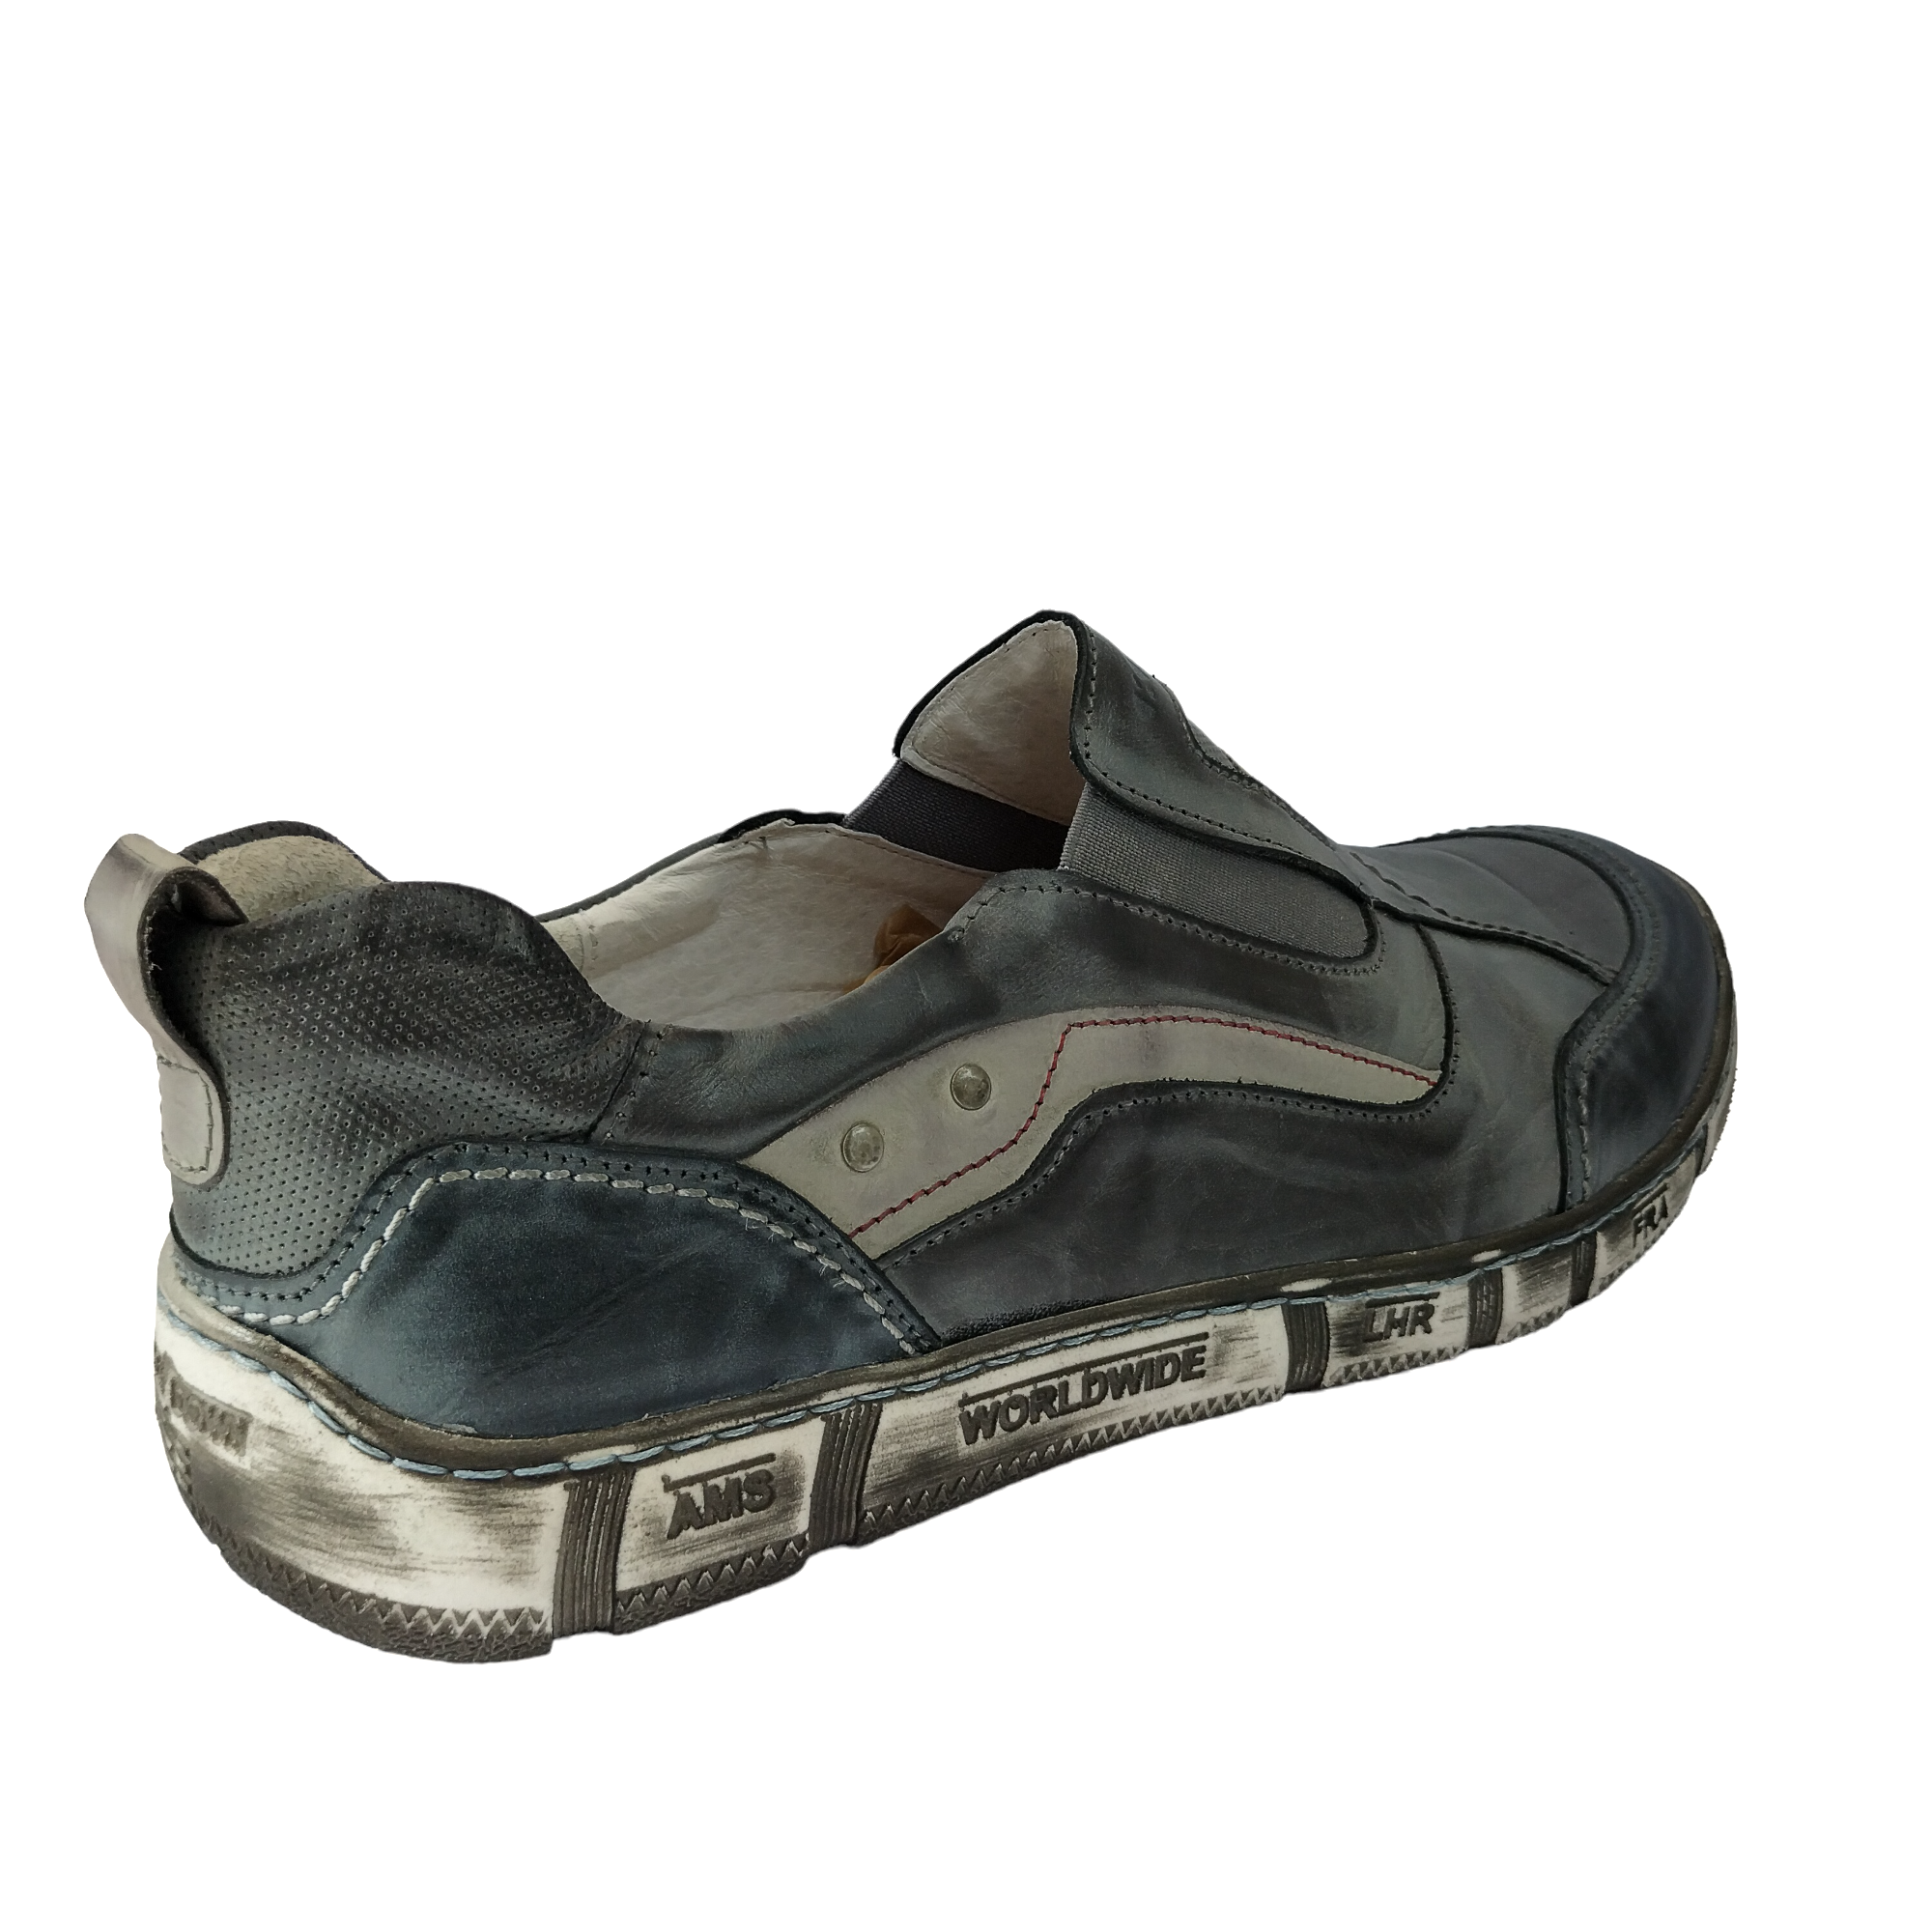 Kacper 1-6868 M - shoe&amp;me - Kacper - Shoe - Mens, Shoes, Winter